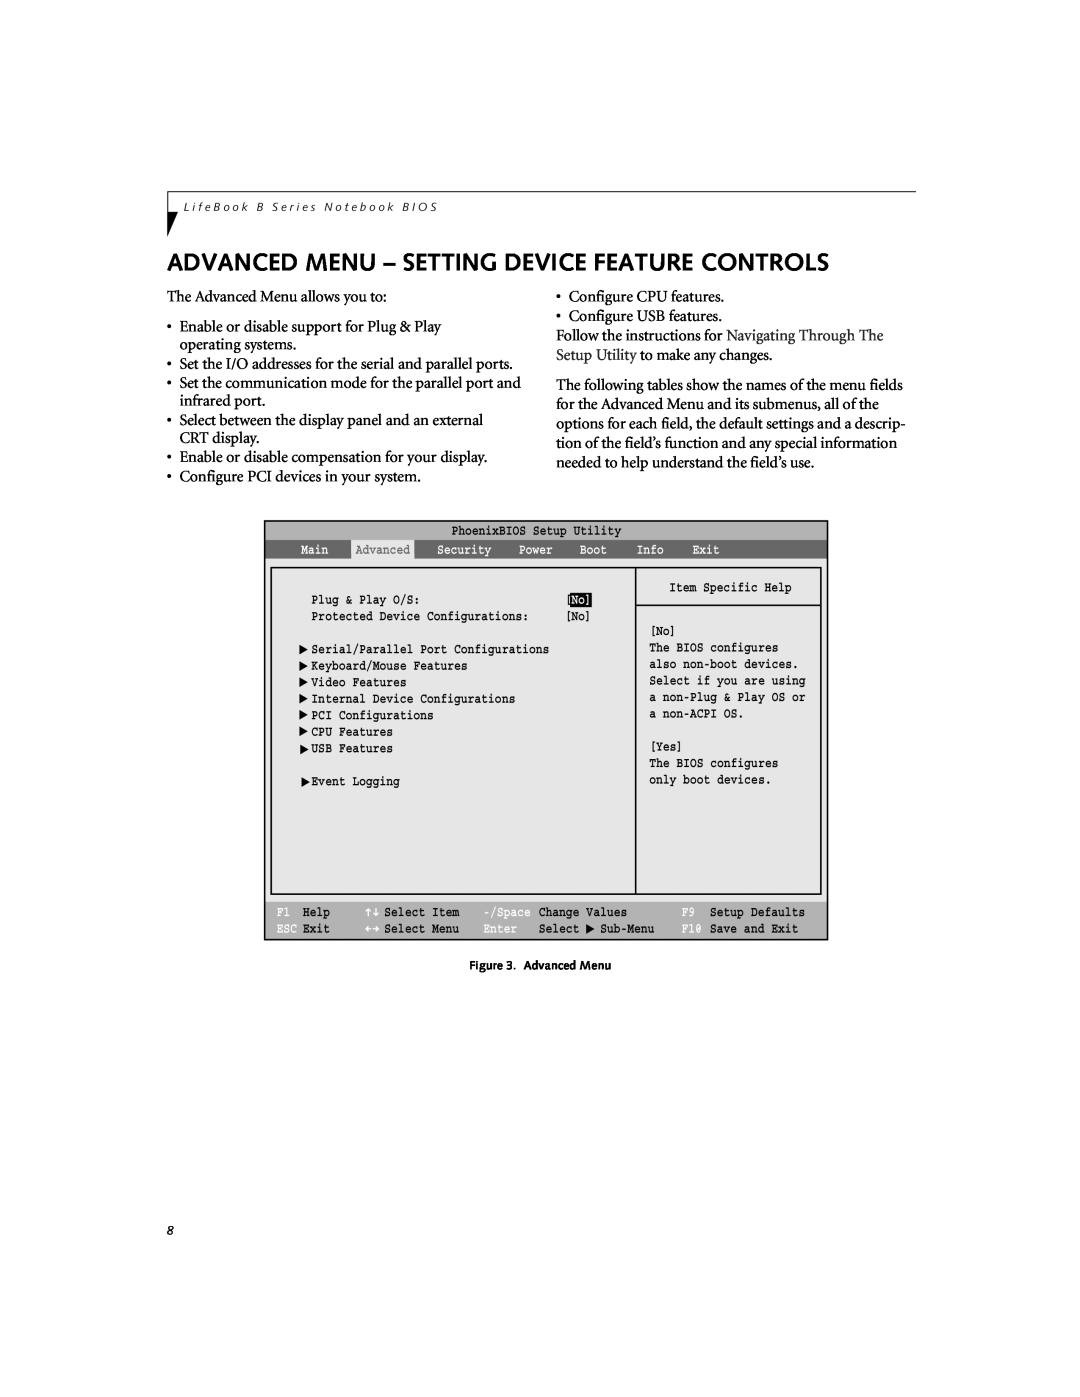 Fujitsu B2620 manual Advanced Menu - Setting Device Feature Controls 